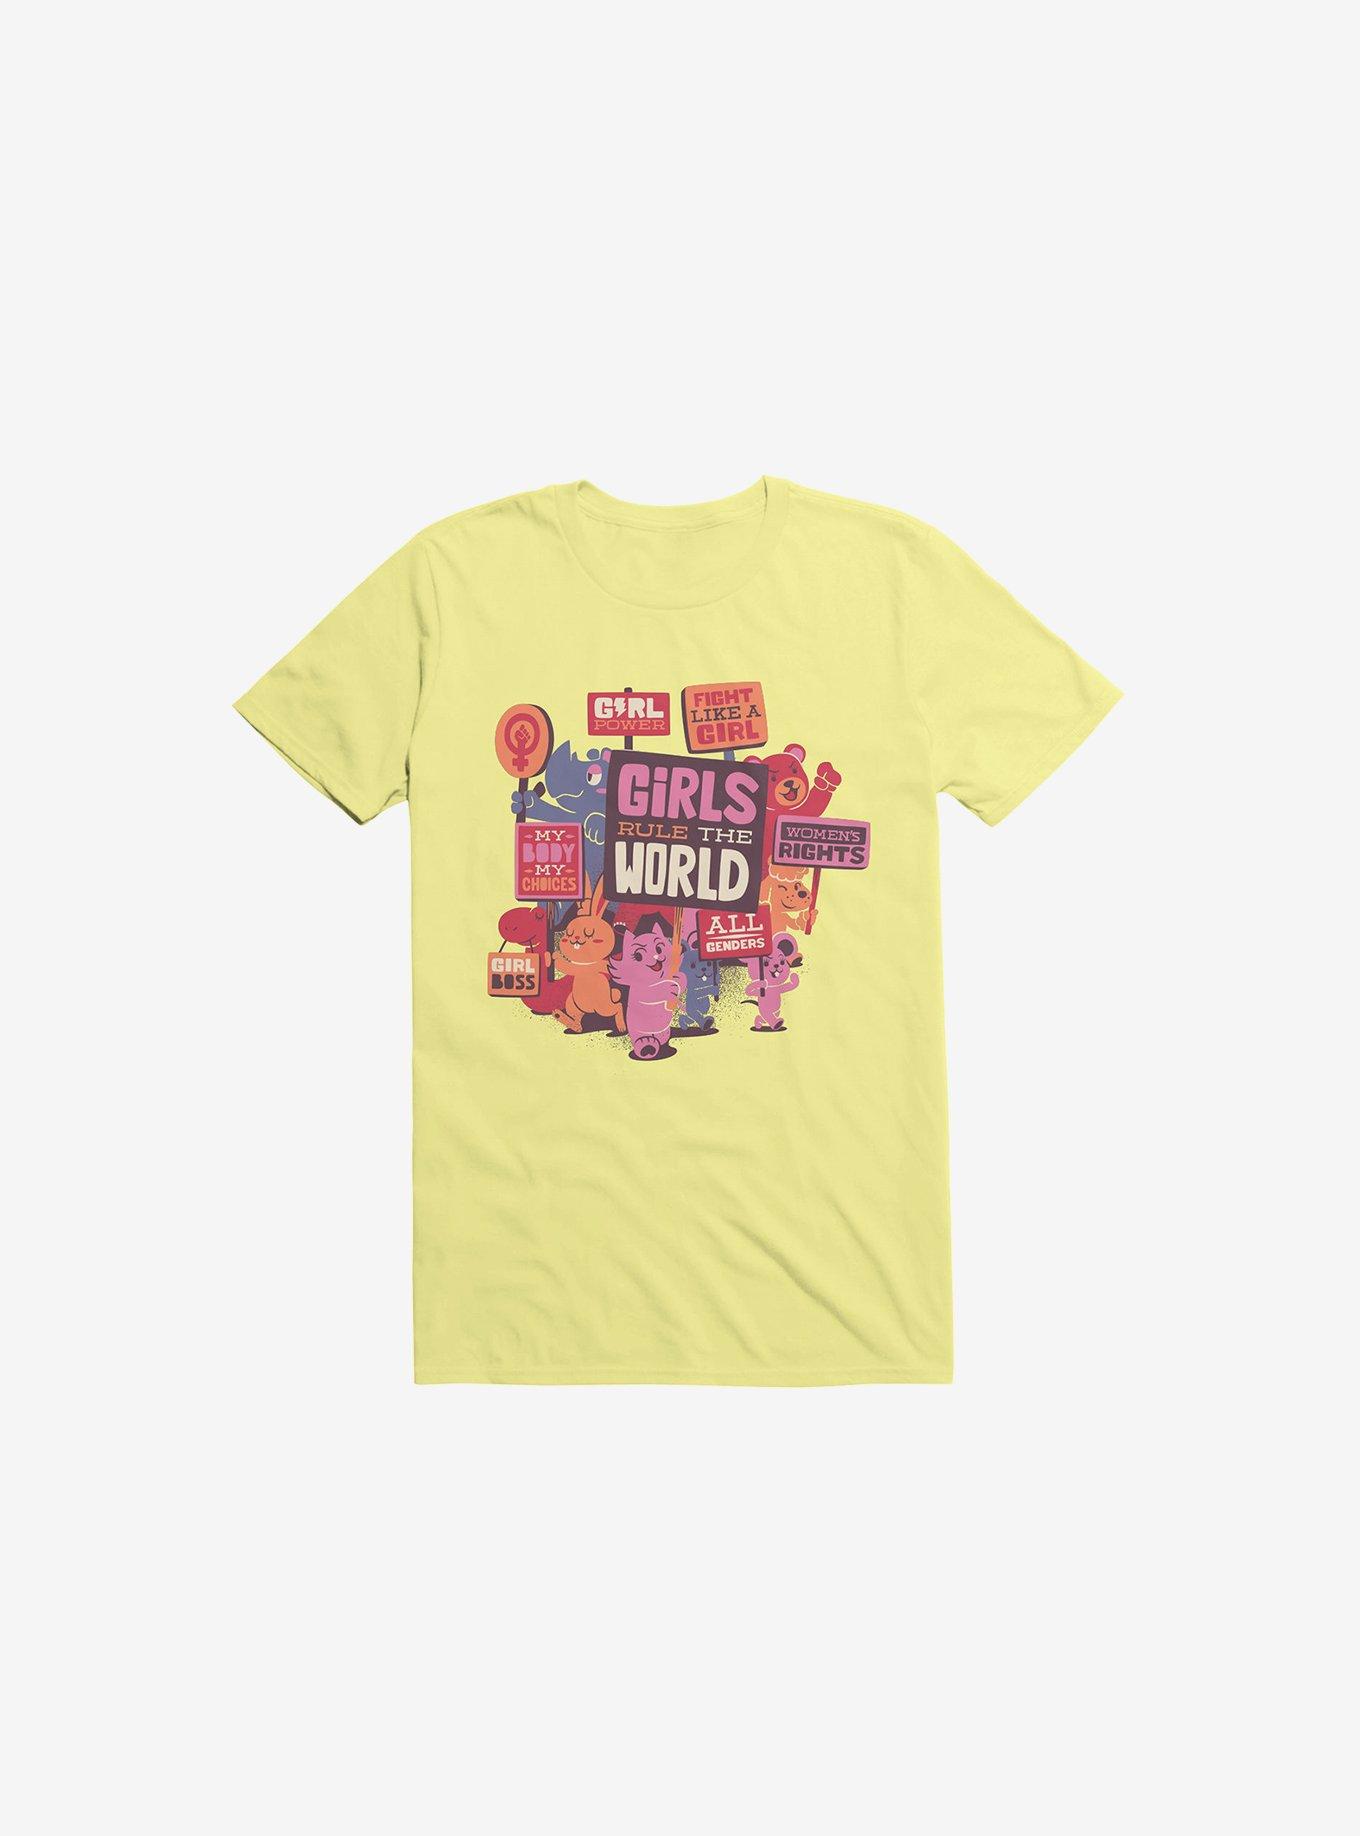 Girls Rule The World Corn Silk Yellow T-Shirt, , hi-res